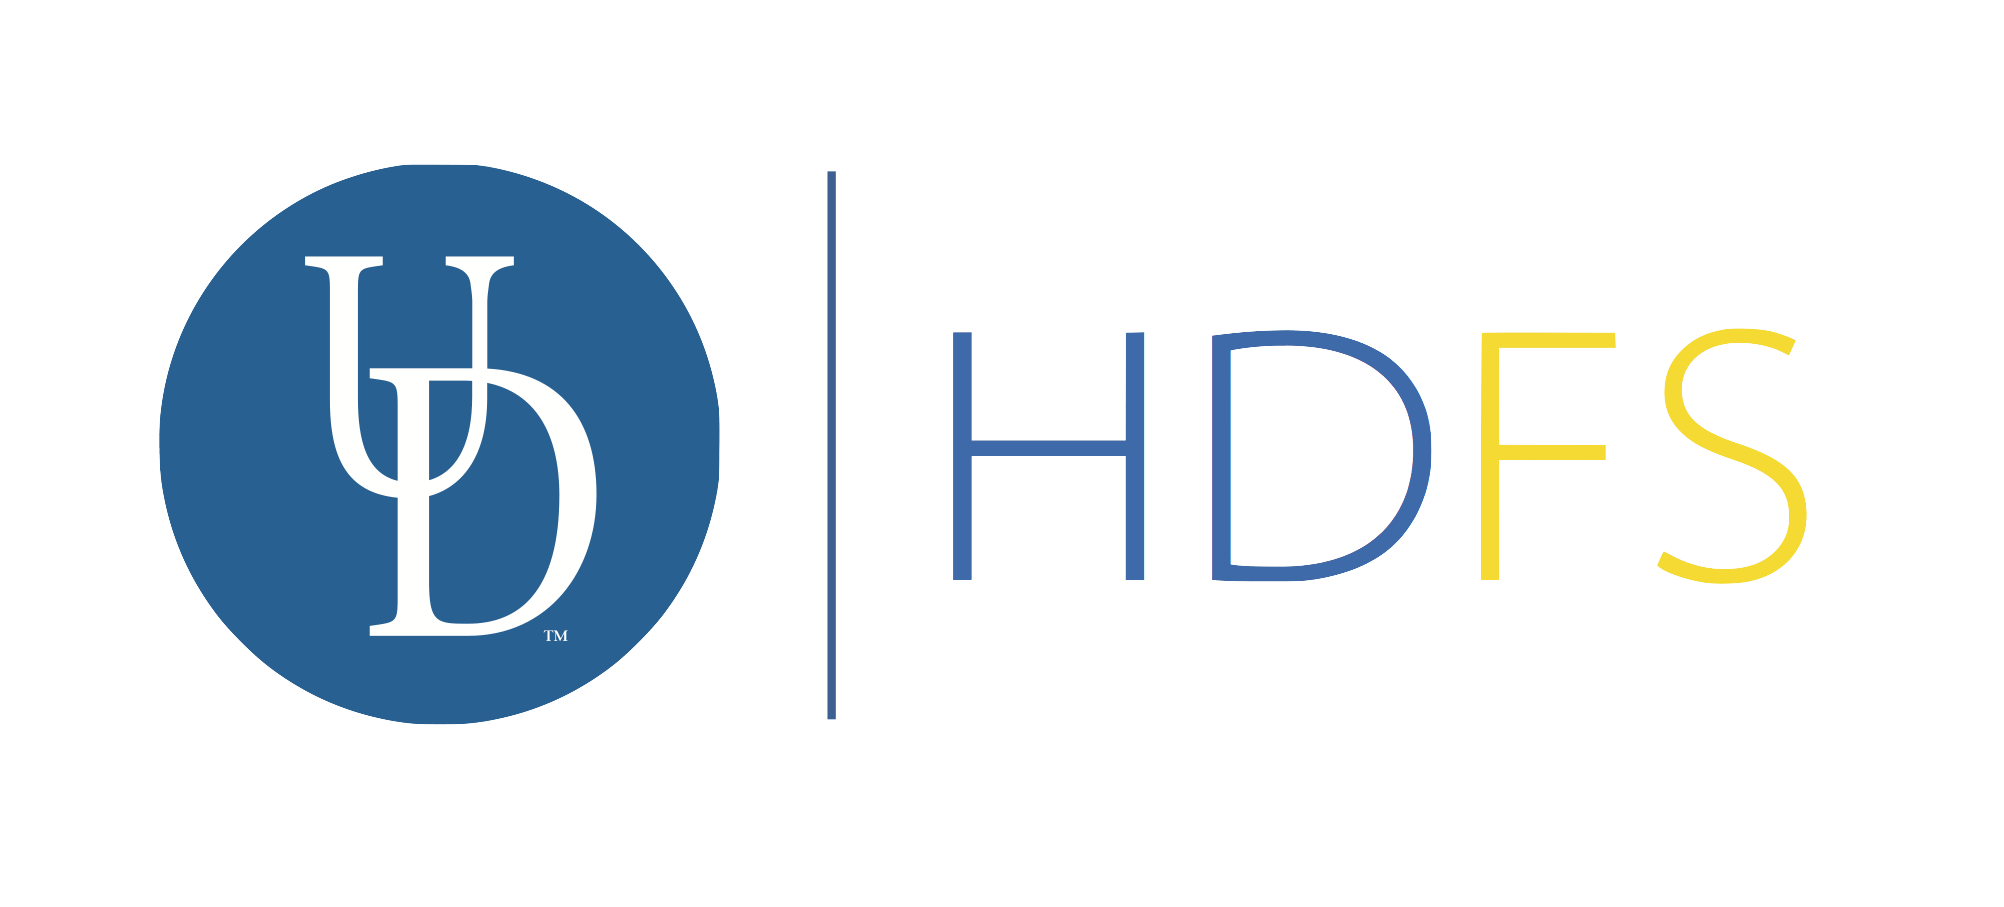 HDFS Logo - hdfs logo - HDFS